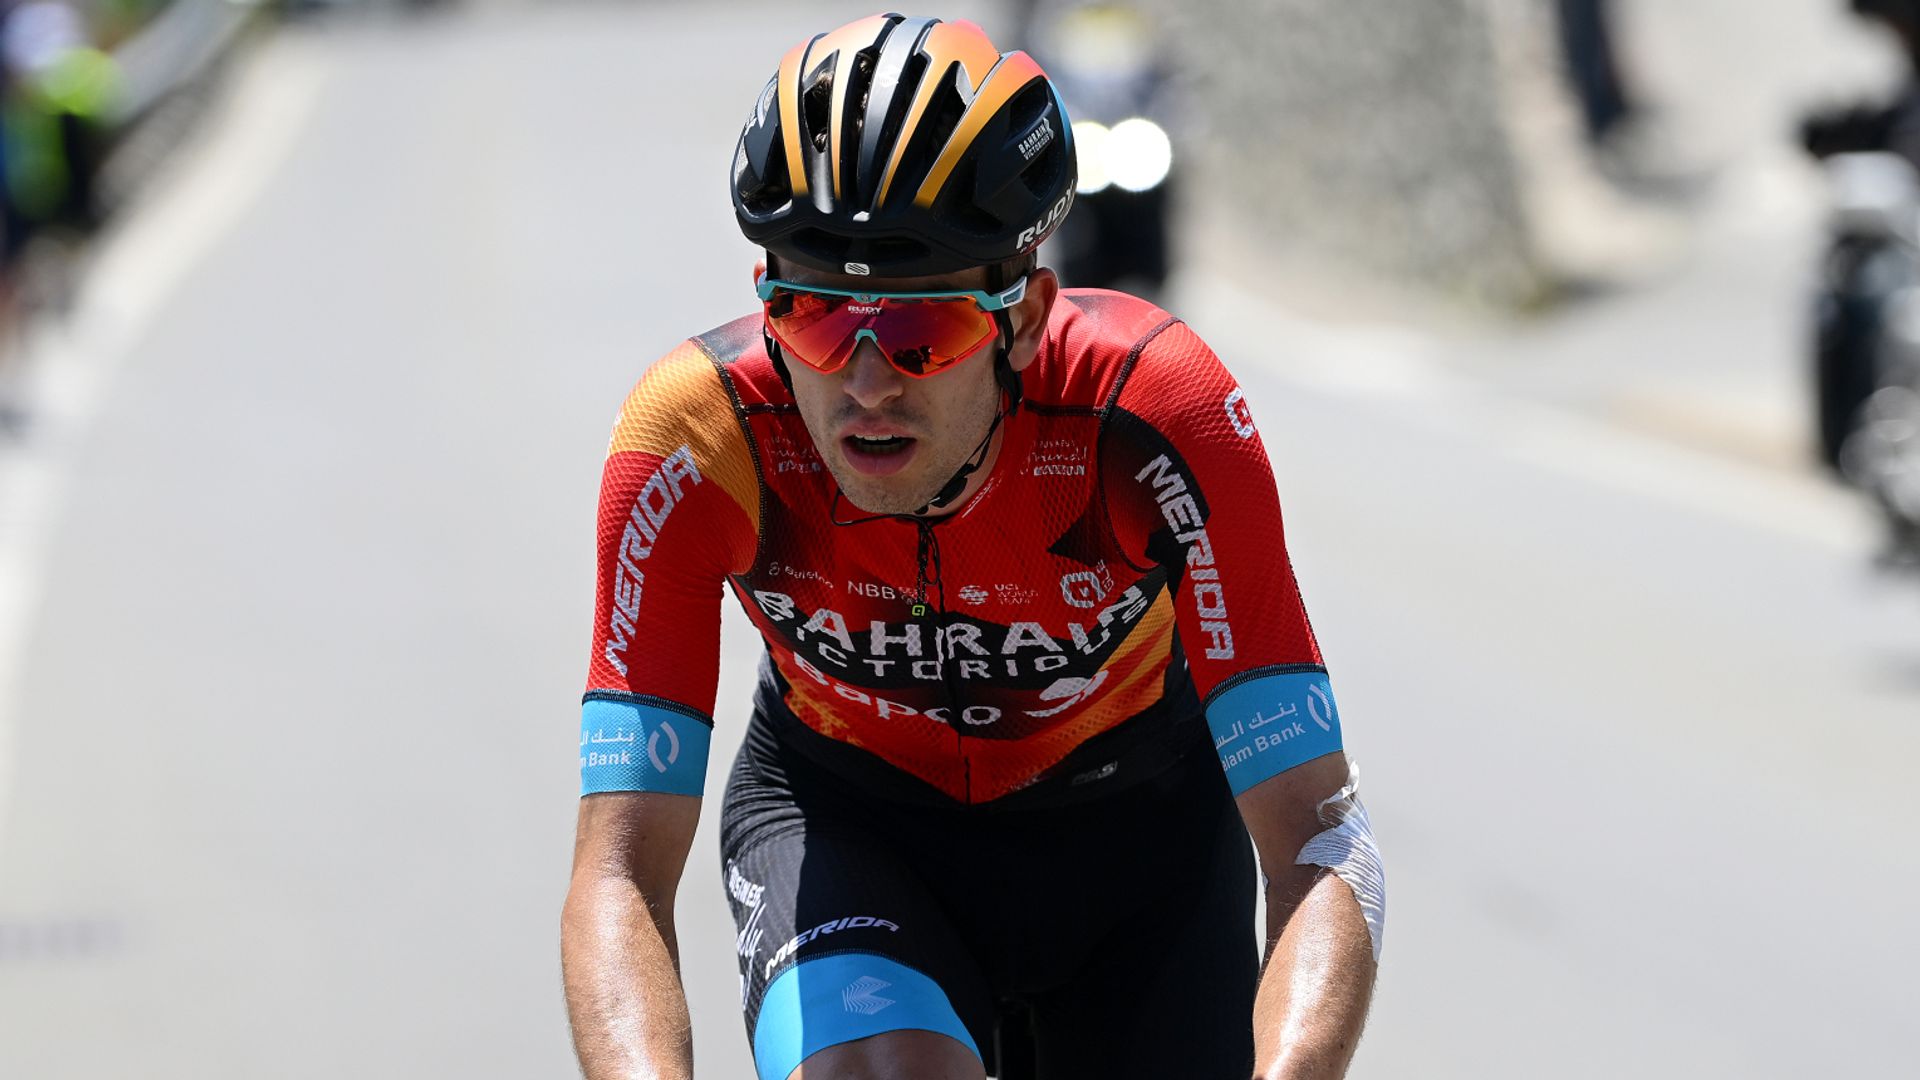 Swiss rider Mader dies aged 26 after crash on Tour de Suisse